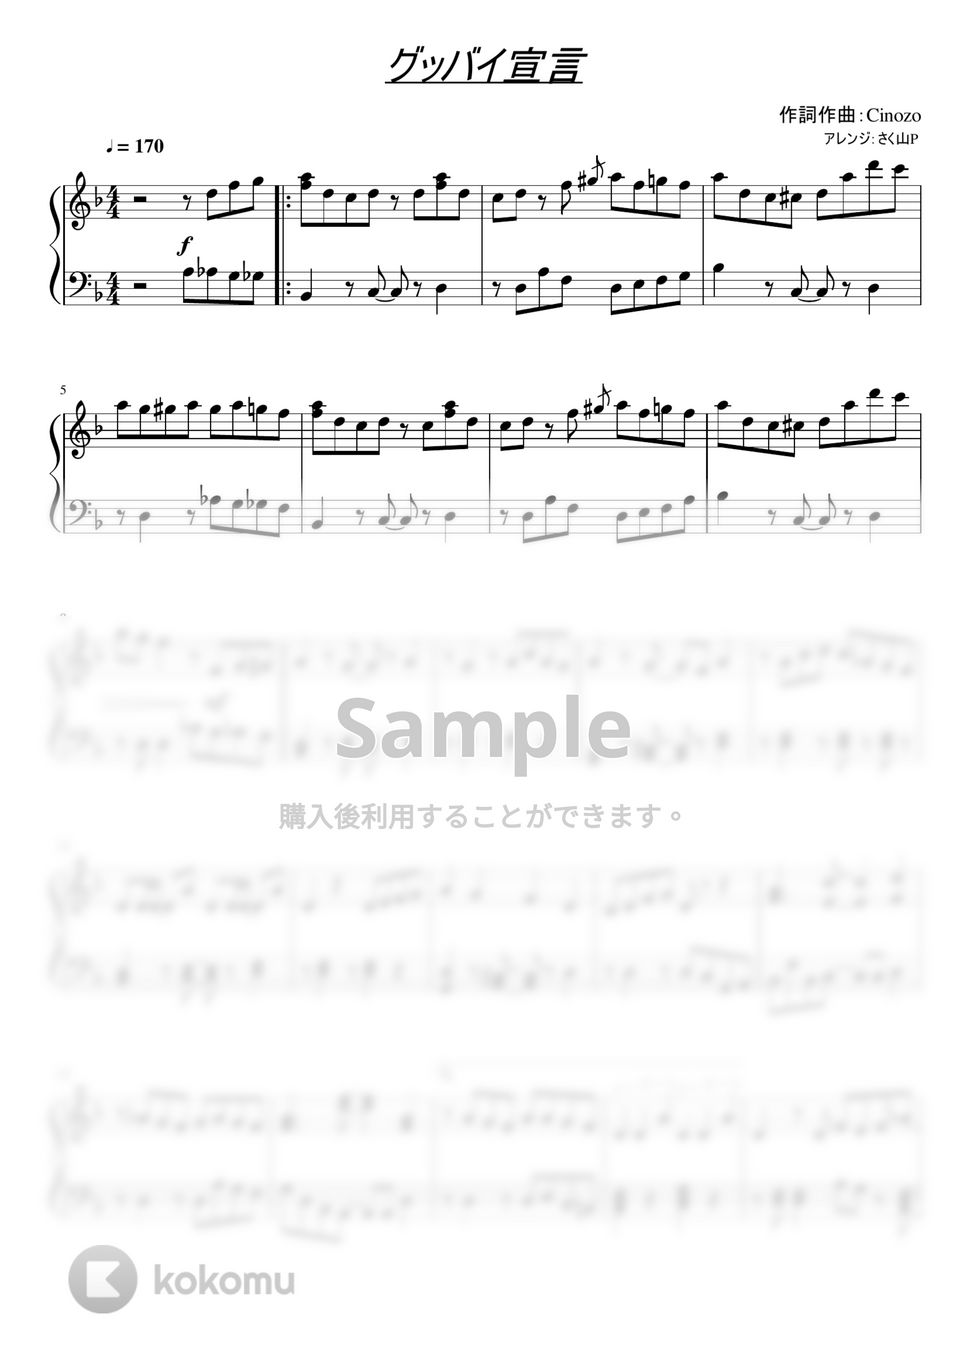 Chinozo - グッバイ宣言 (ピアノ中級 / FloweR) by さく山P